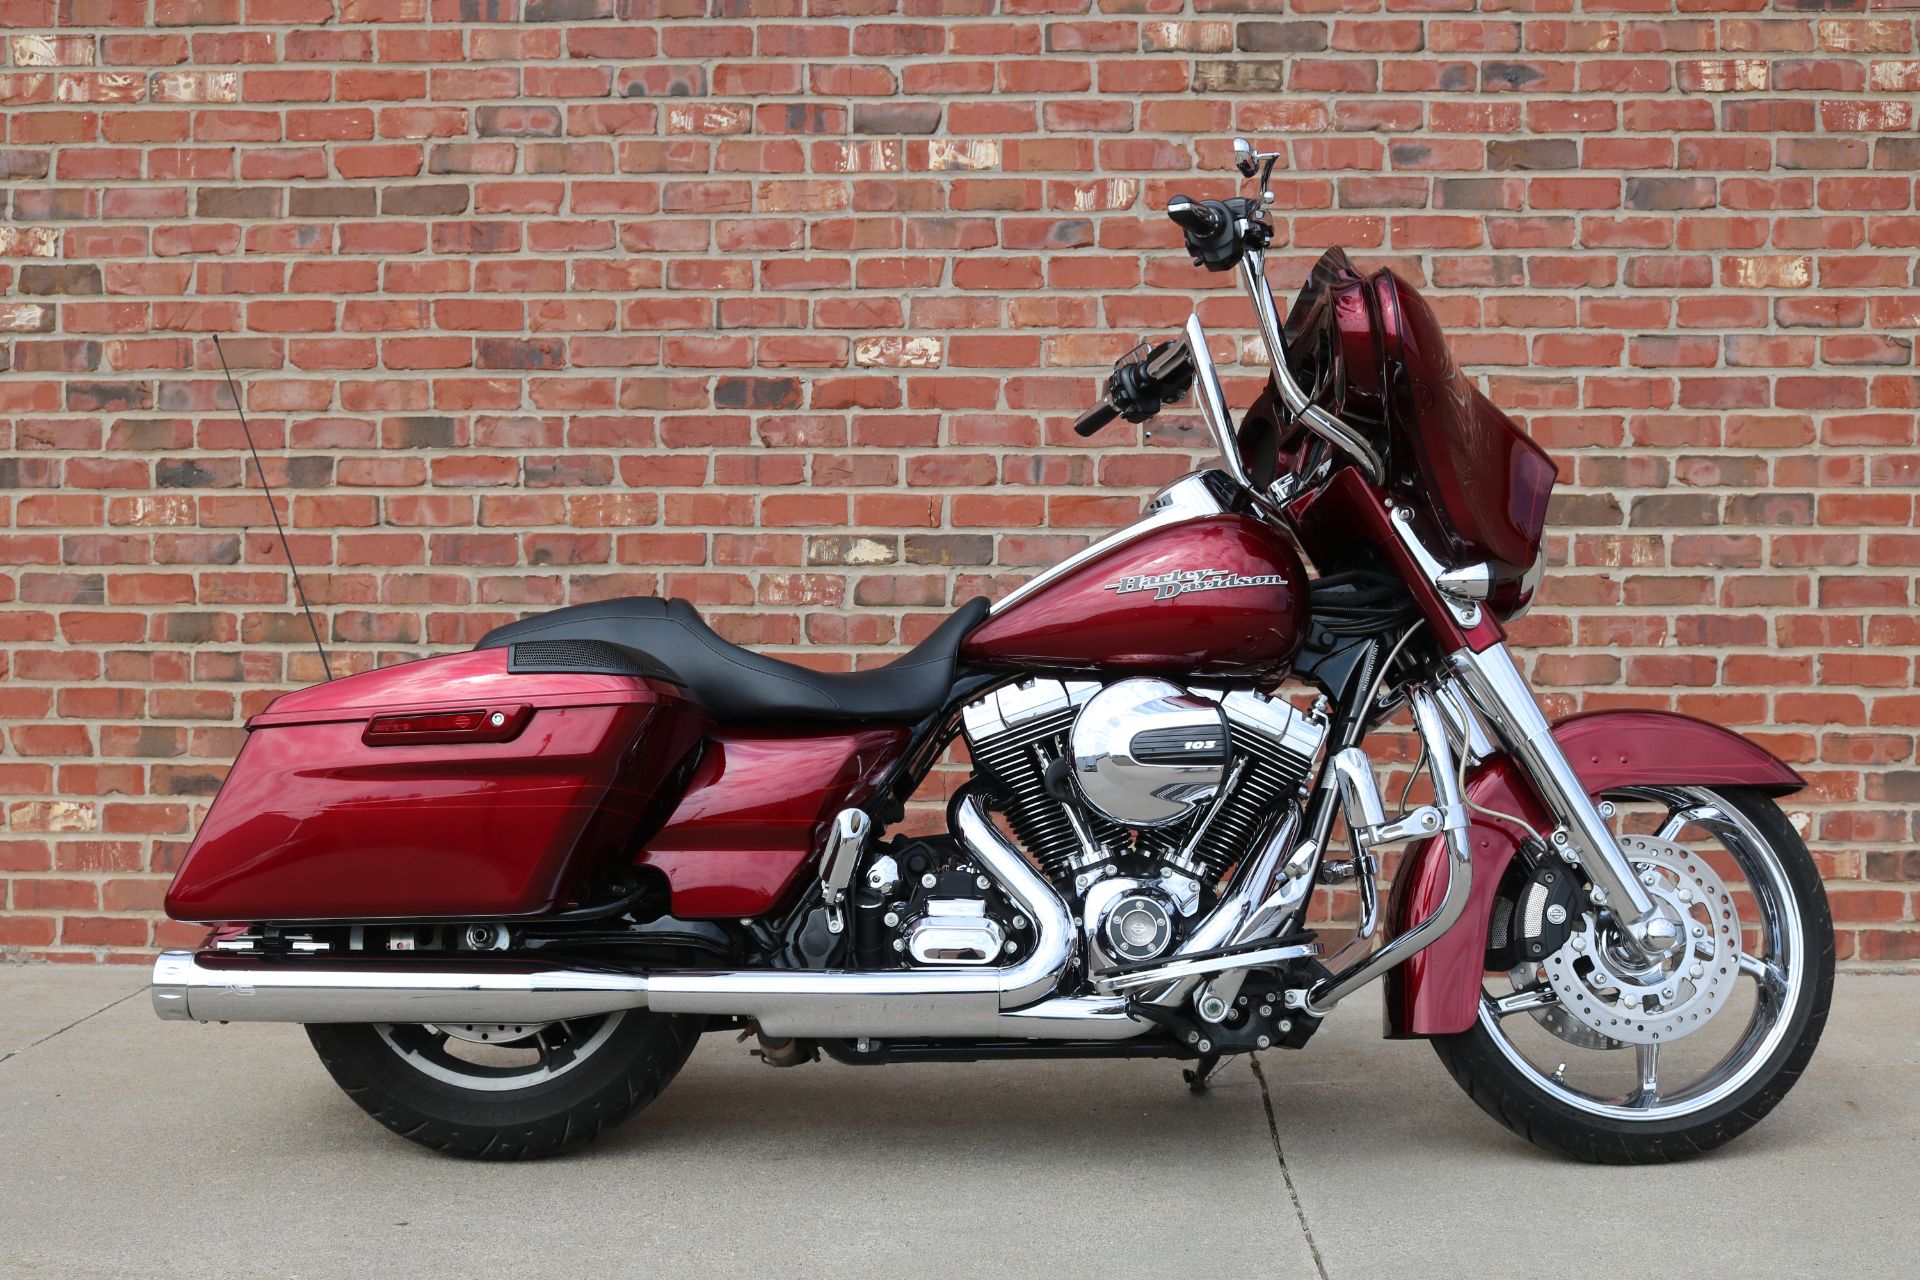 2016 Harley-Davidson Street Glide® Special in Ames, Iowa - Photo 1